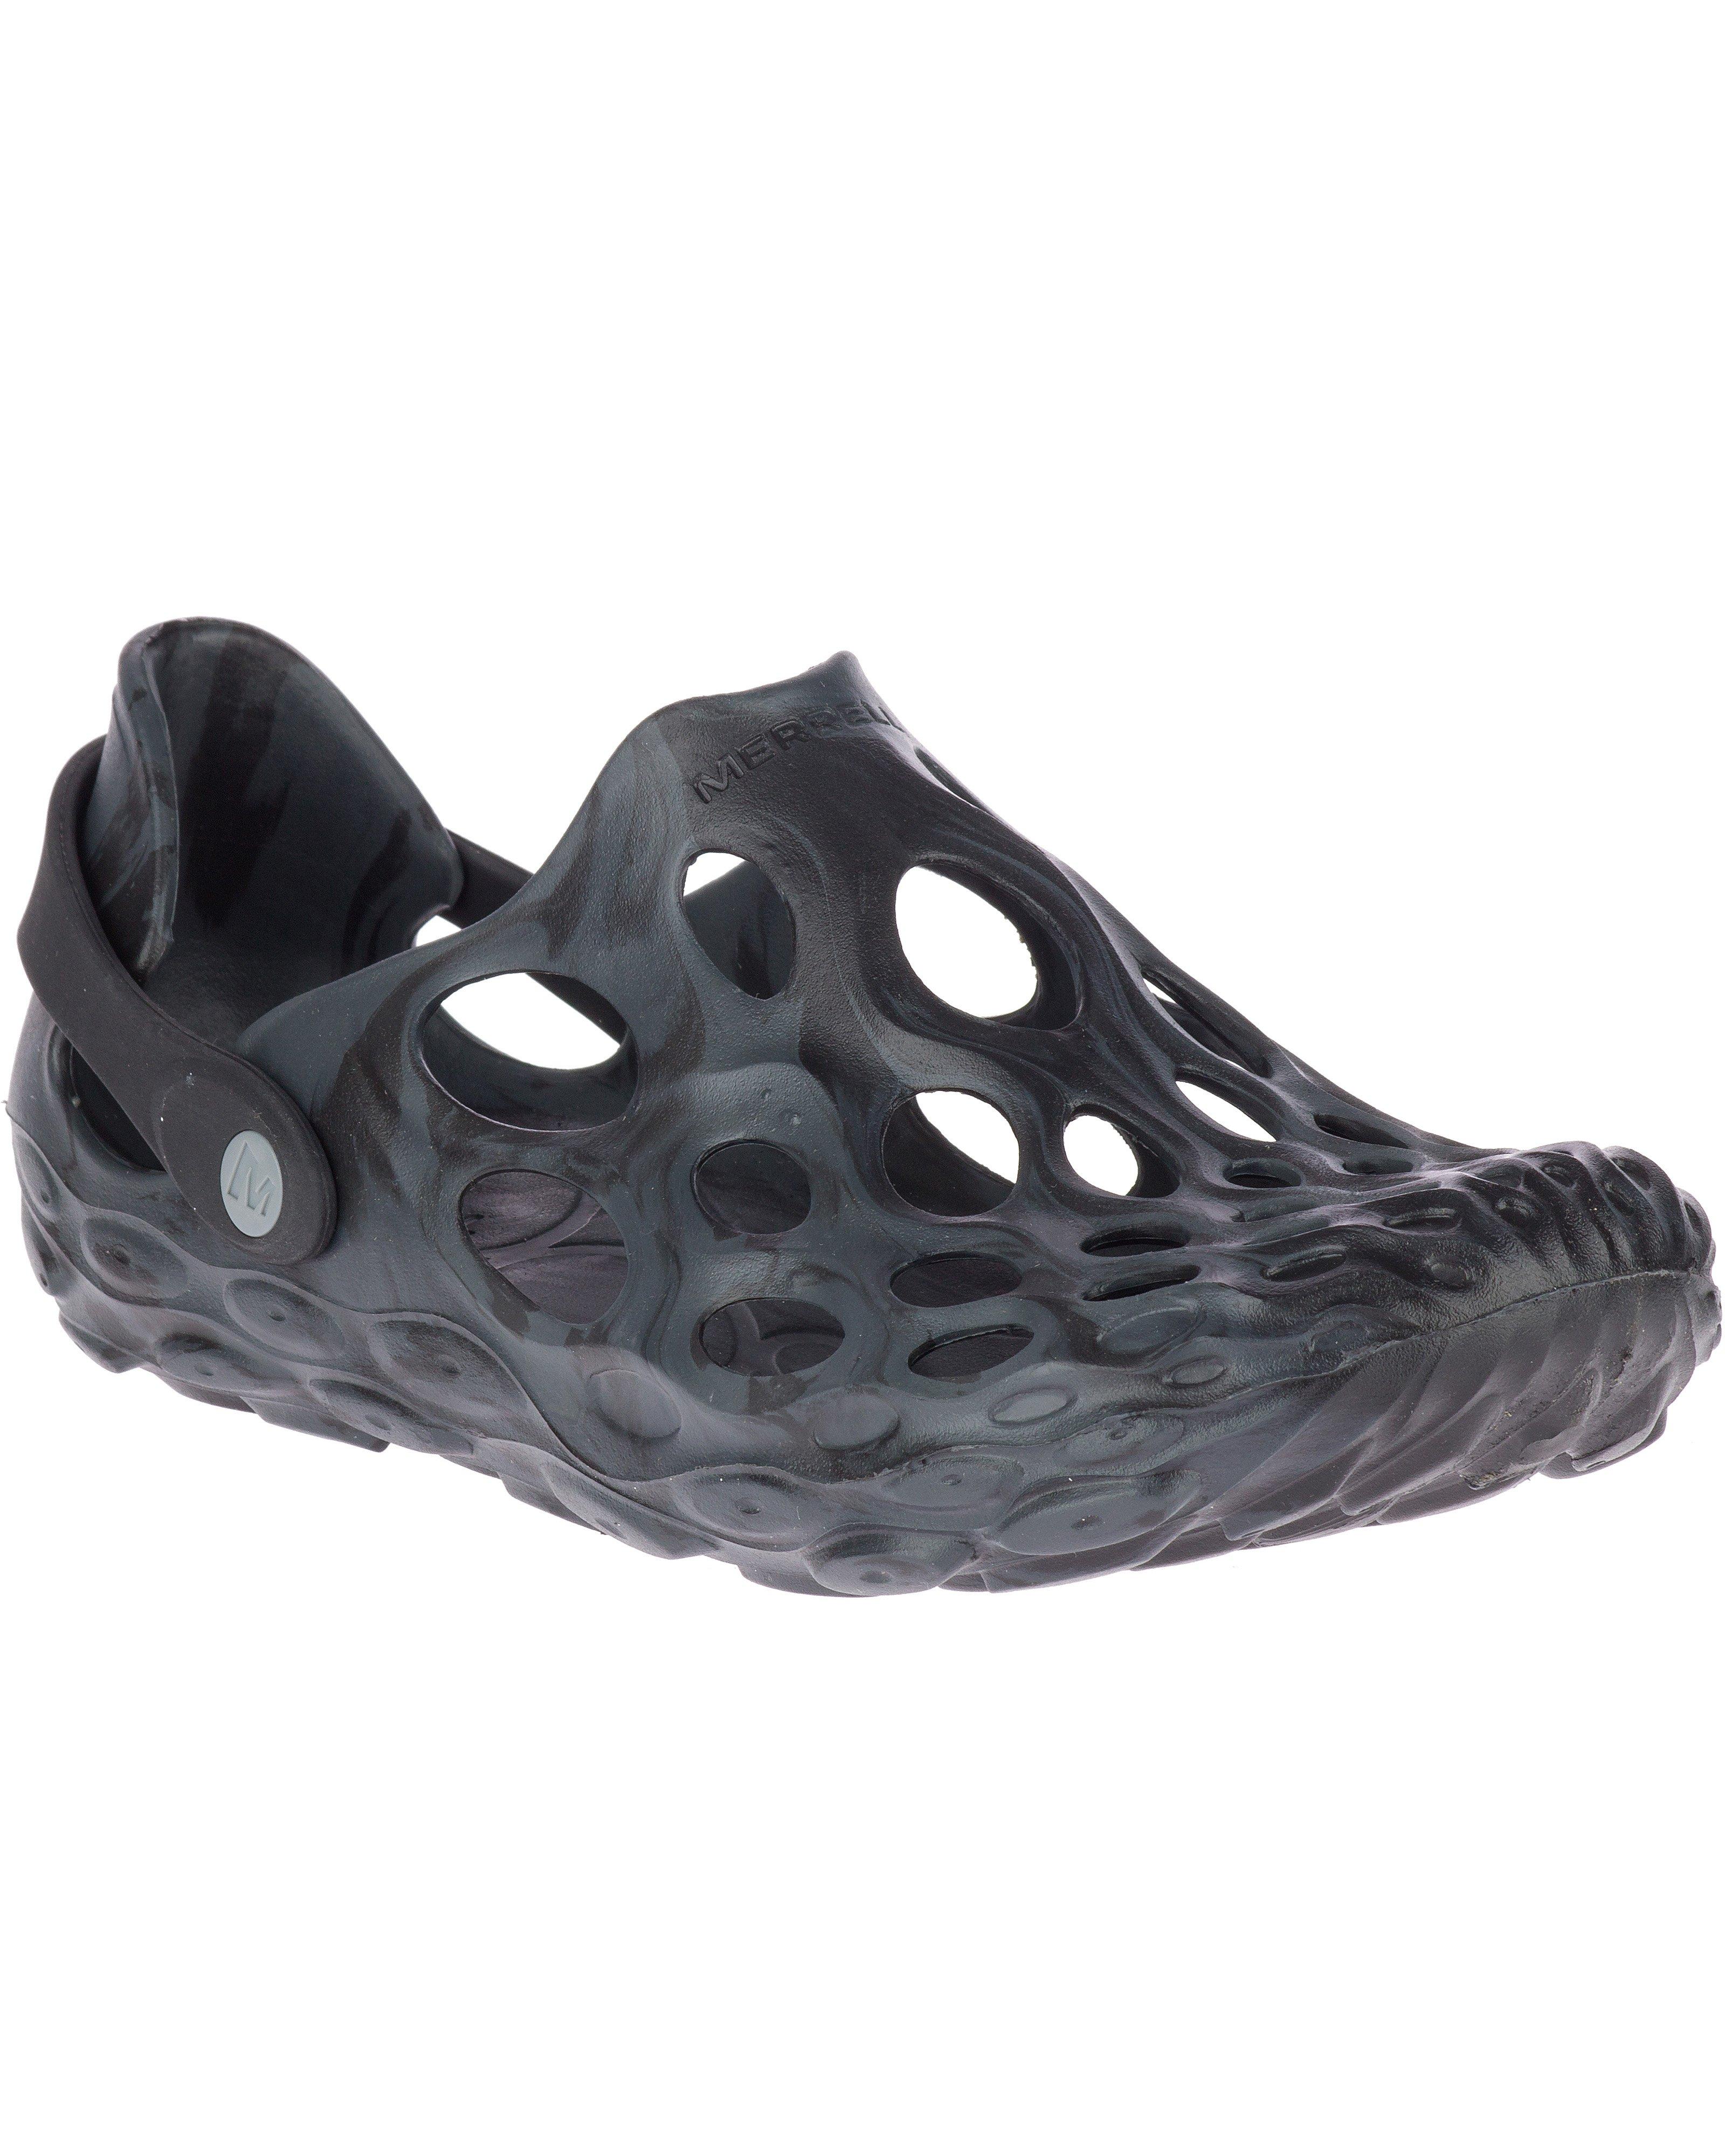 Merrell Men's Hydro Moc Shoe